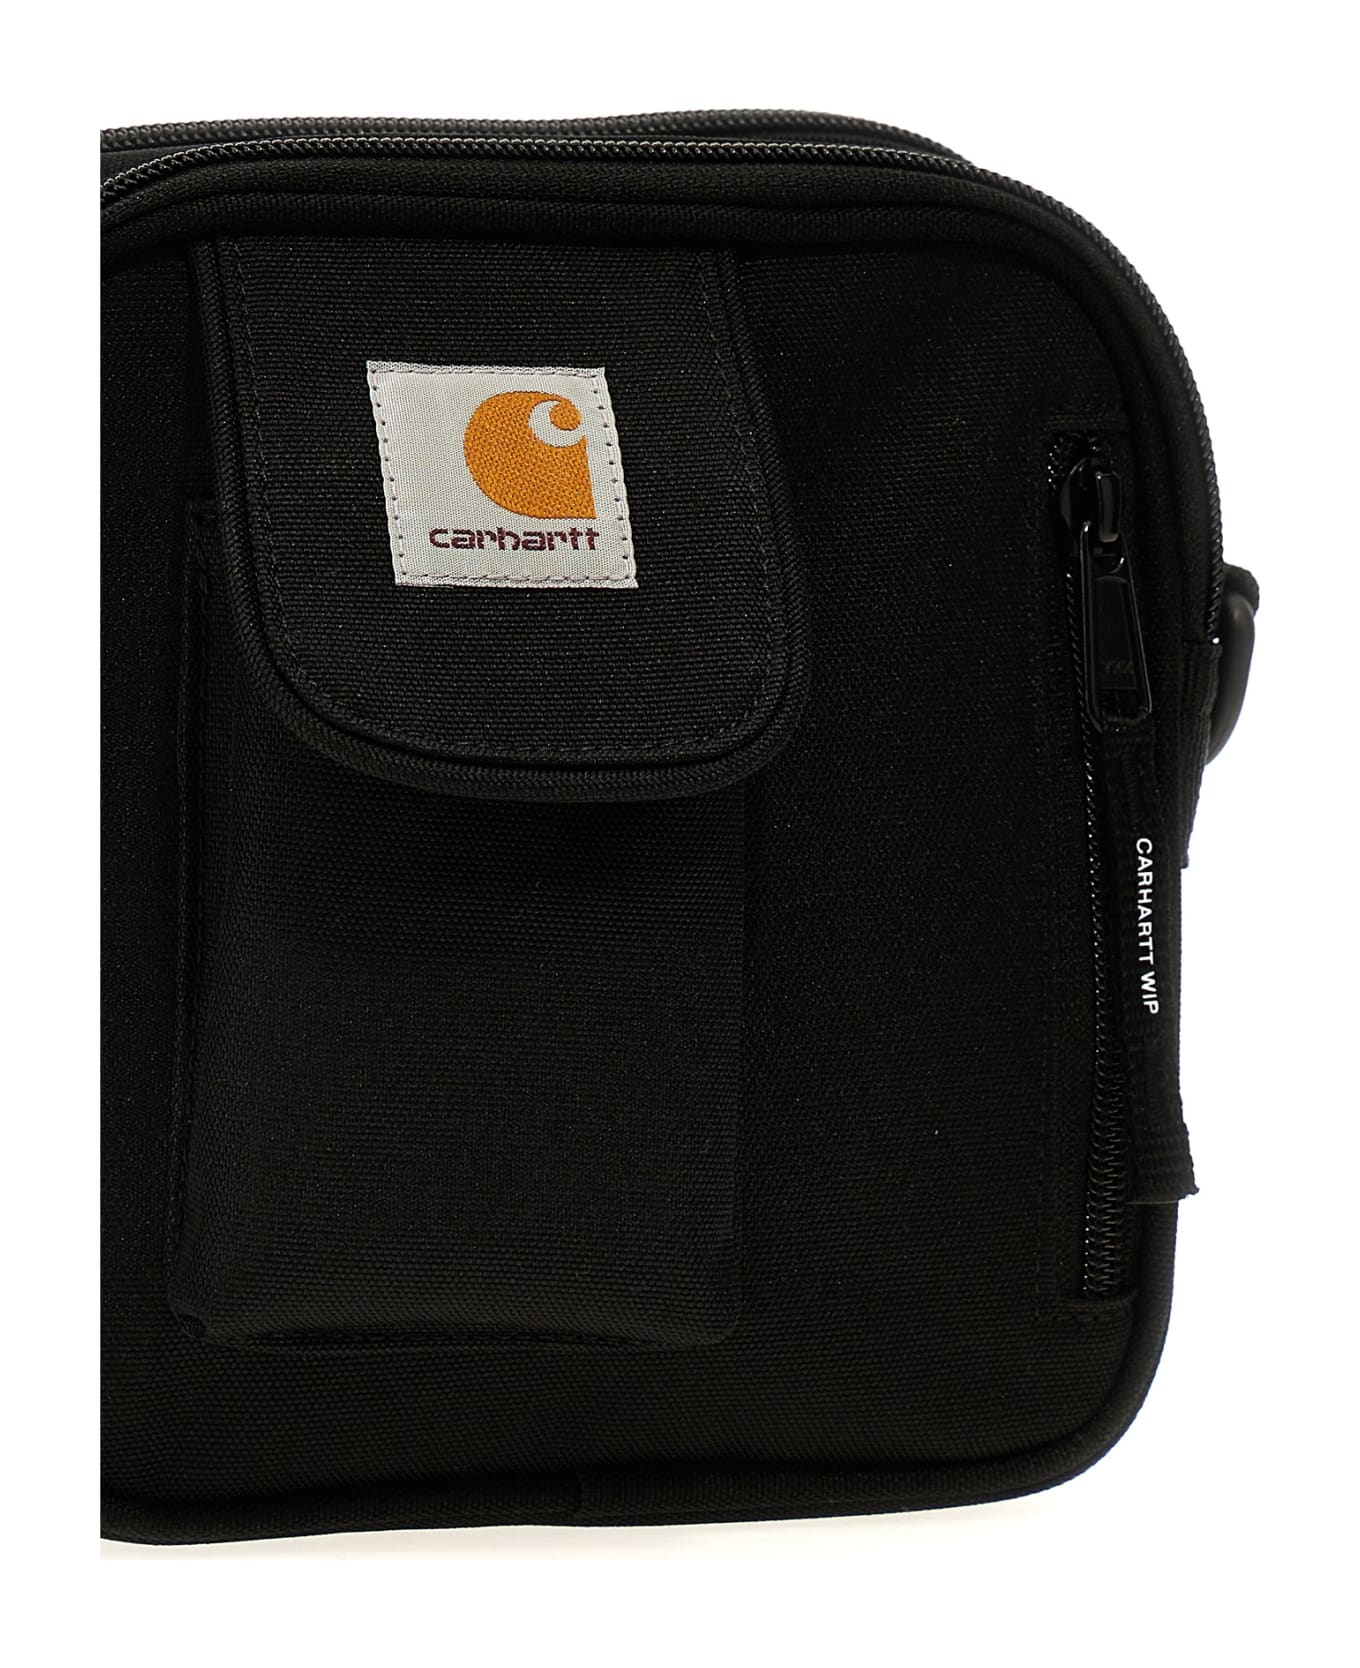 Carhartt 'essentials Bag Small' Crossbody Bag - Xx Black